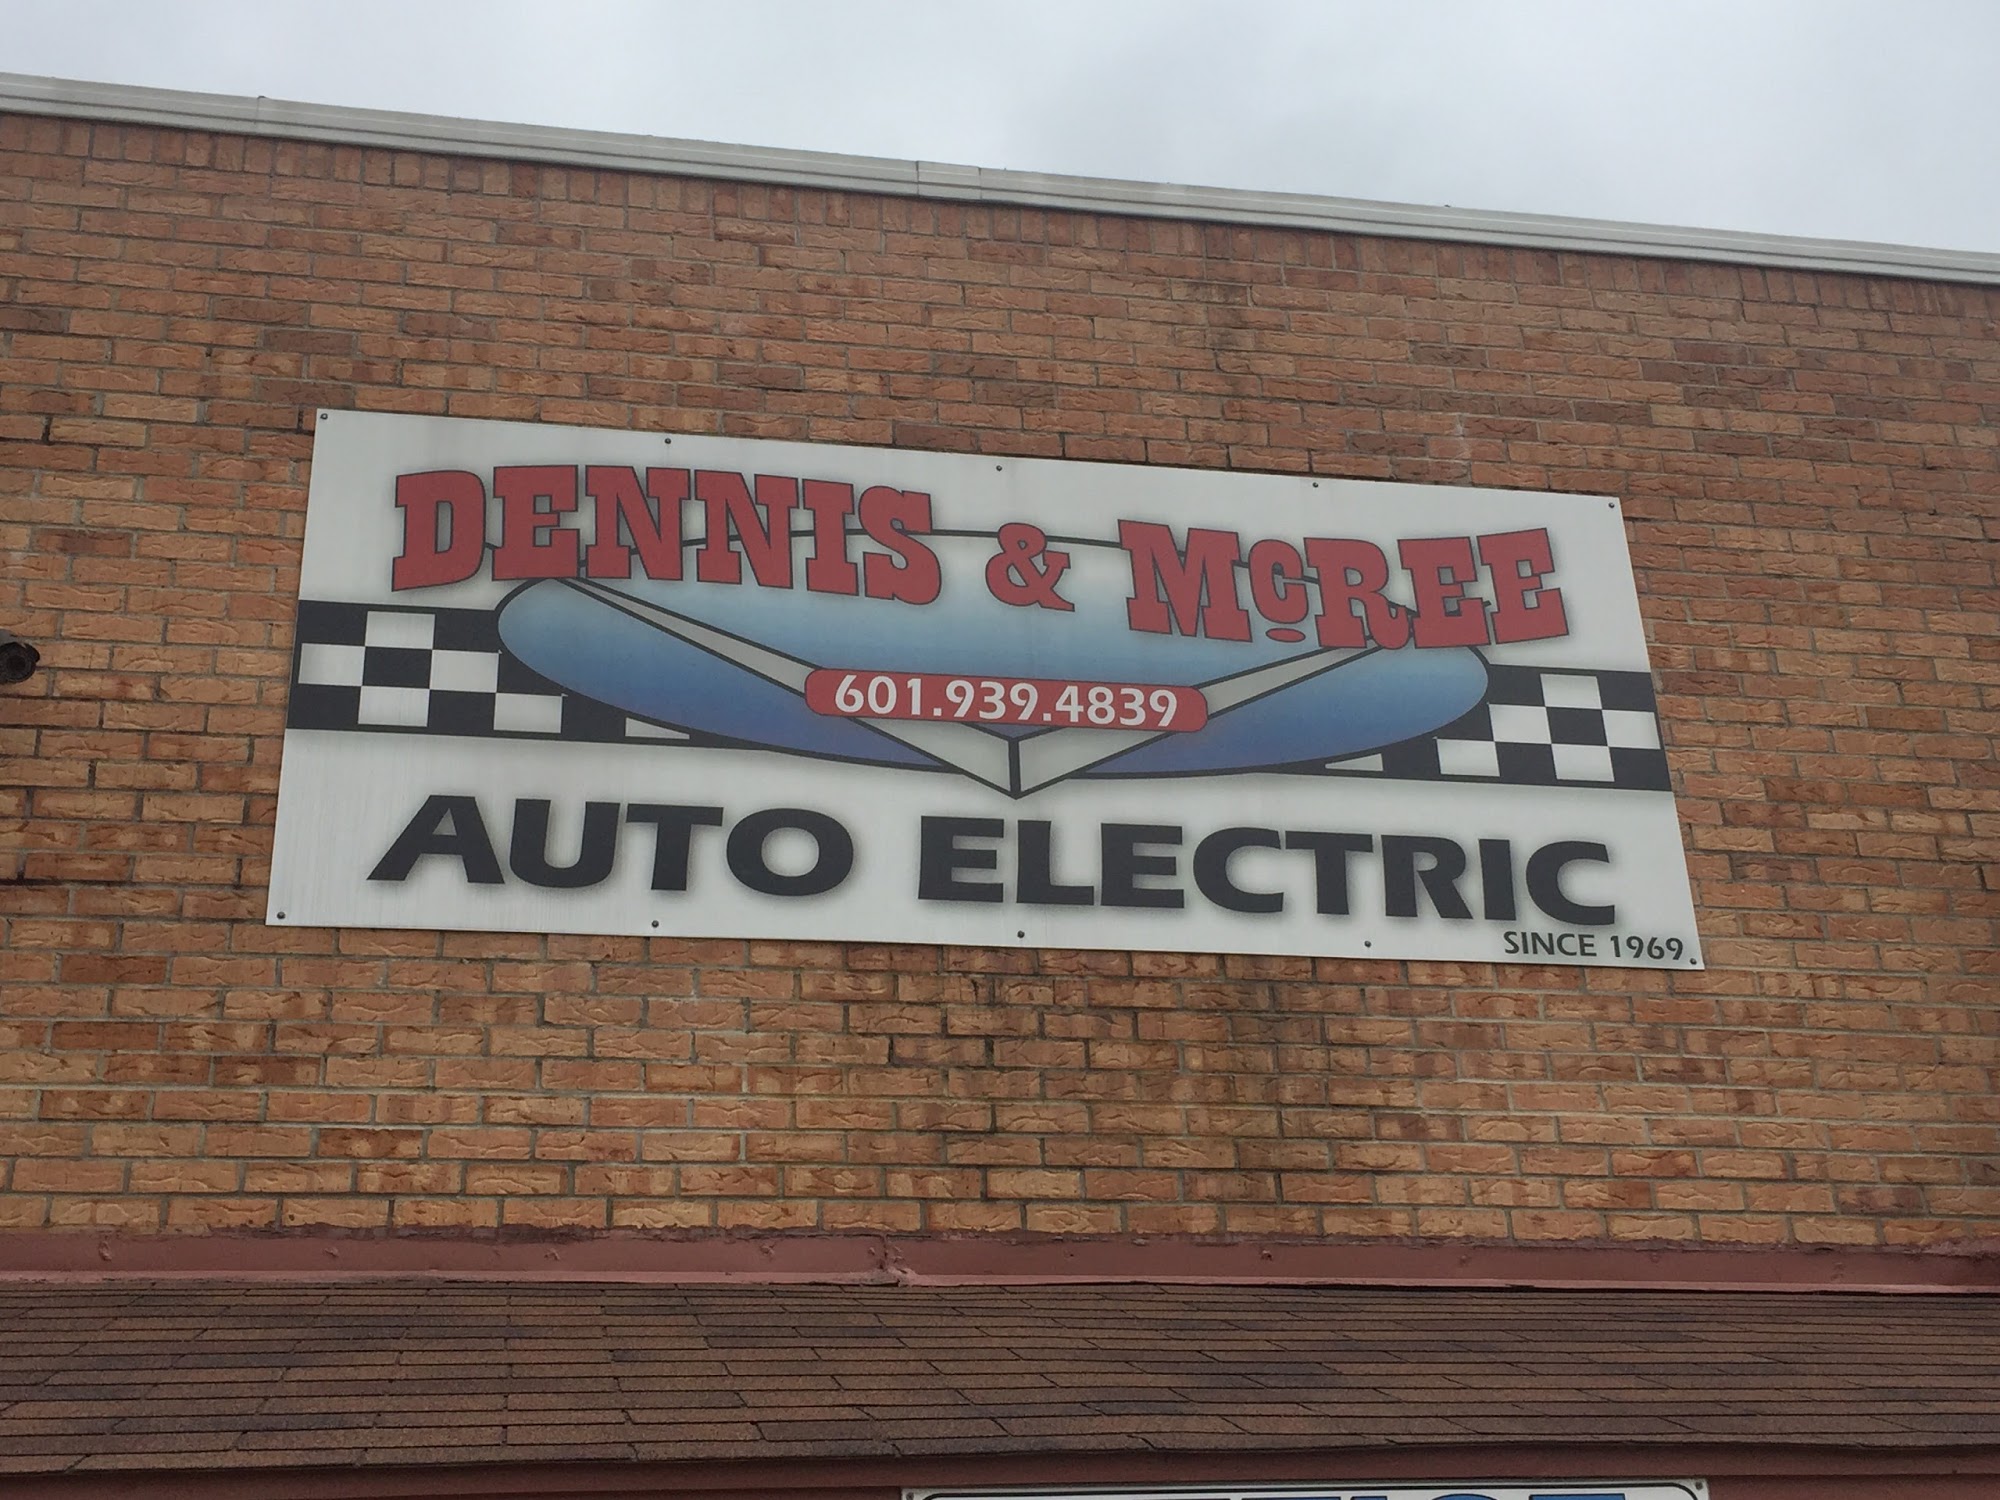 Dennis & Mc Ree Auto Electric